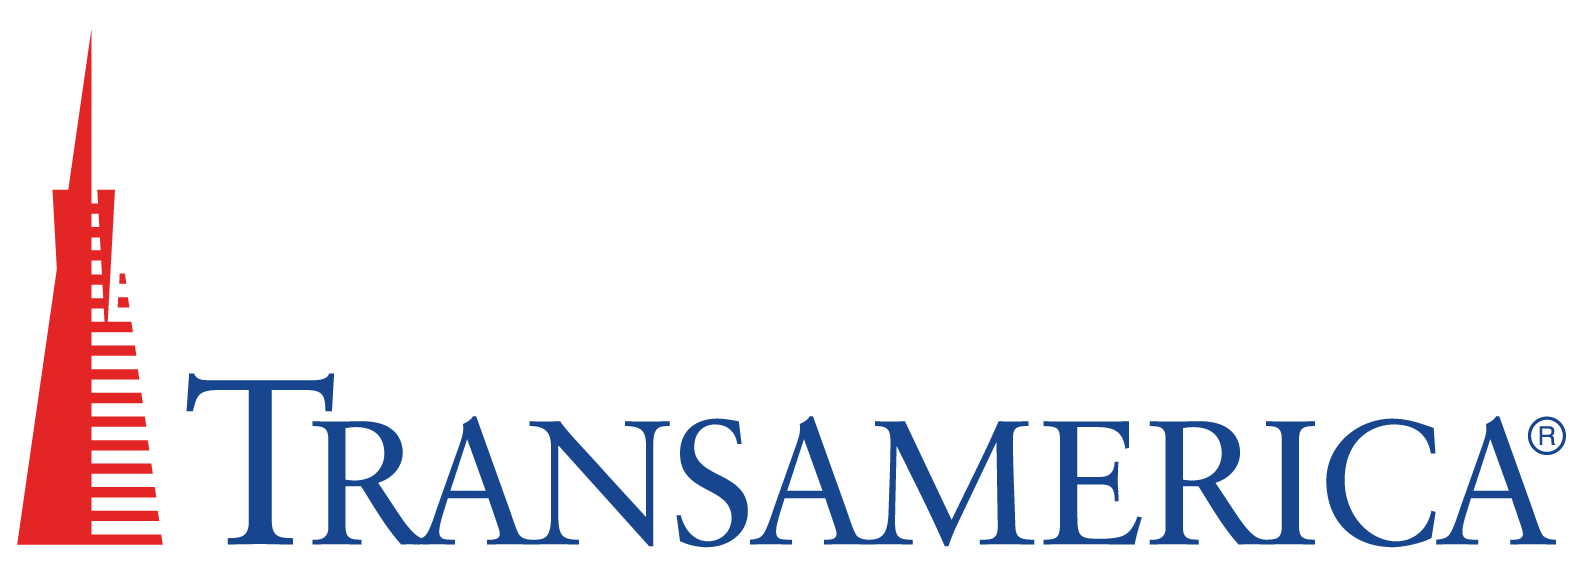 Transamerica-Logo-2color.png